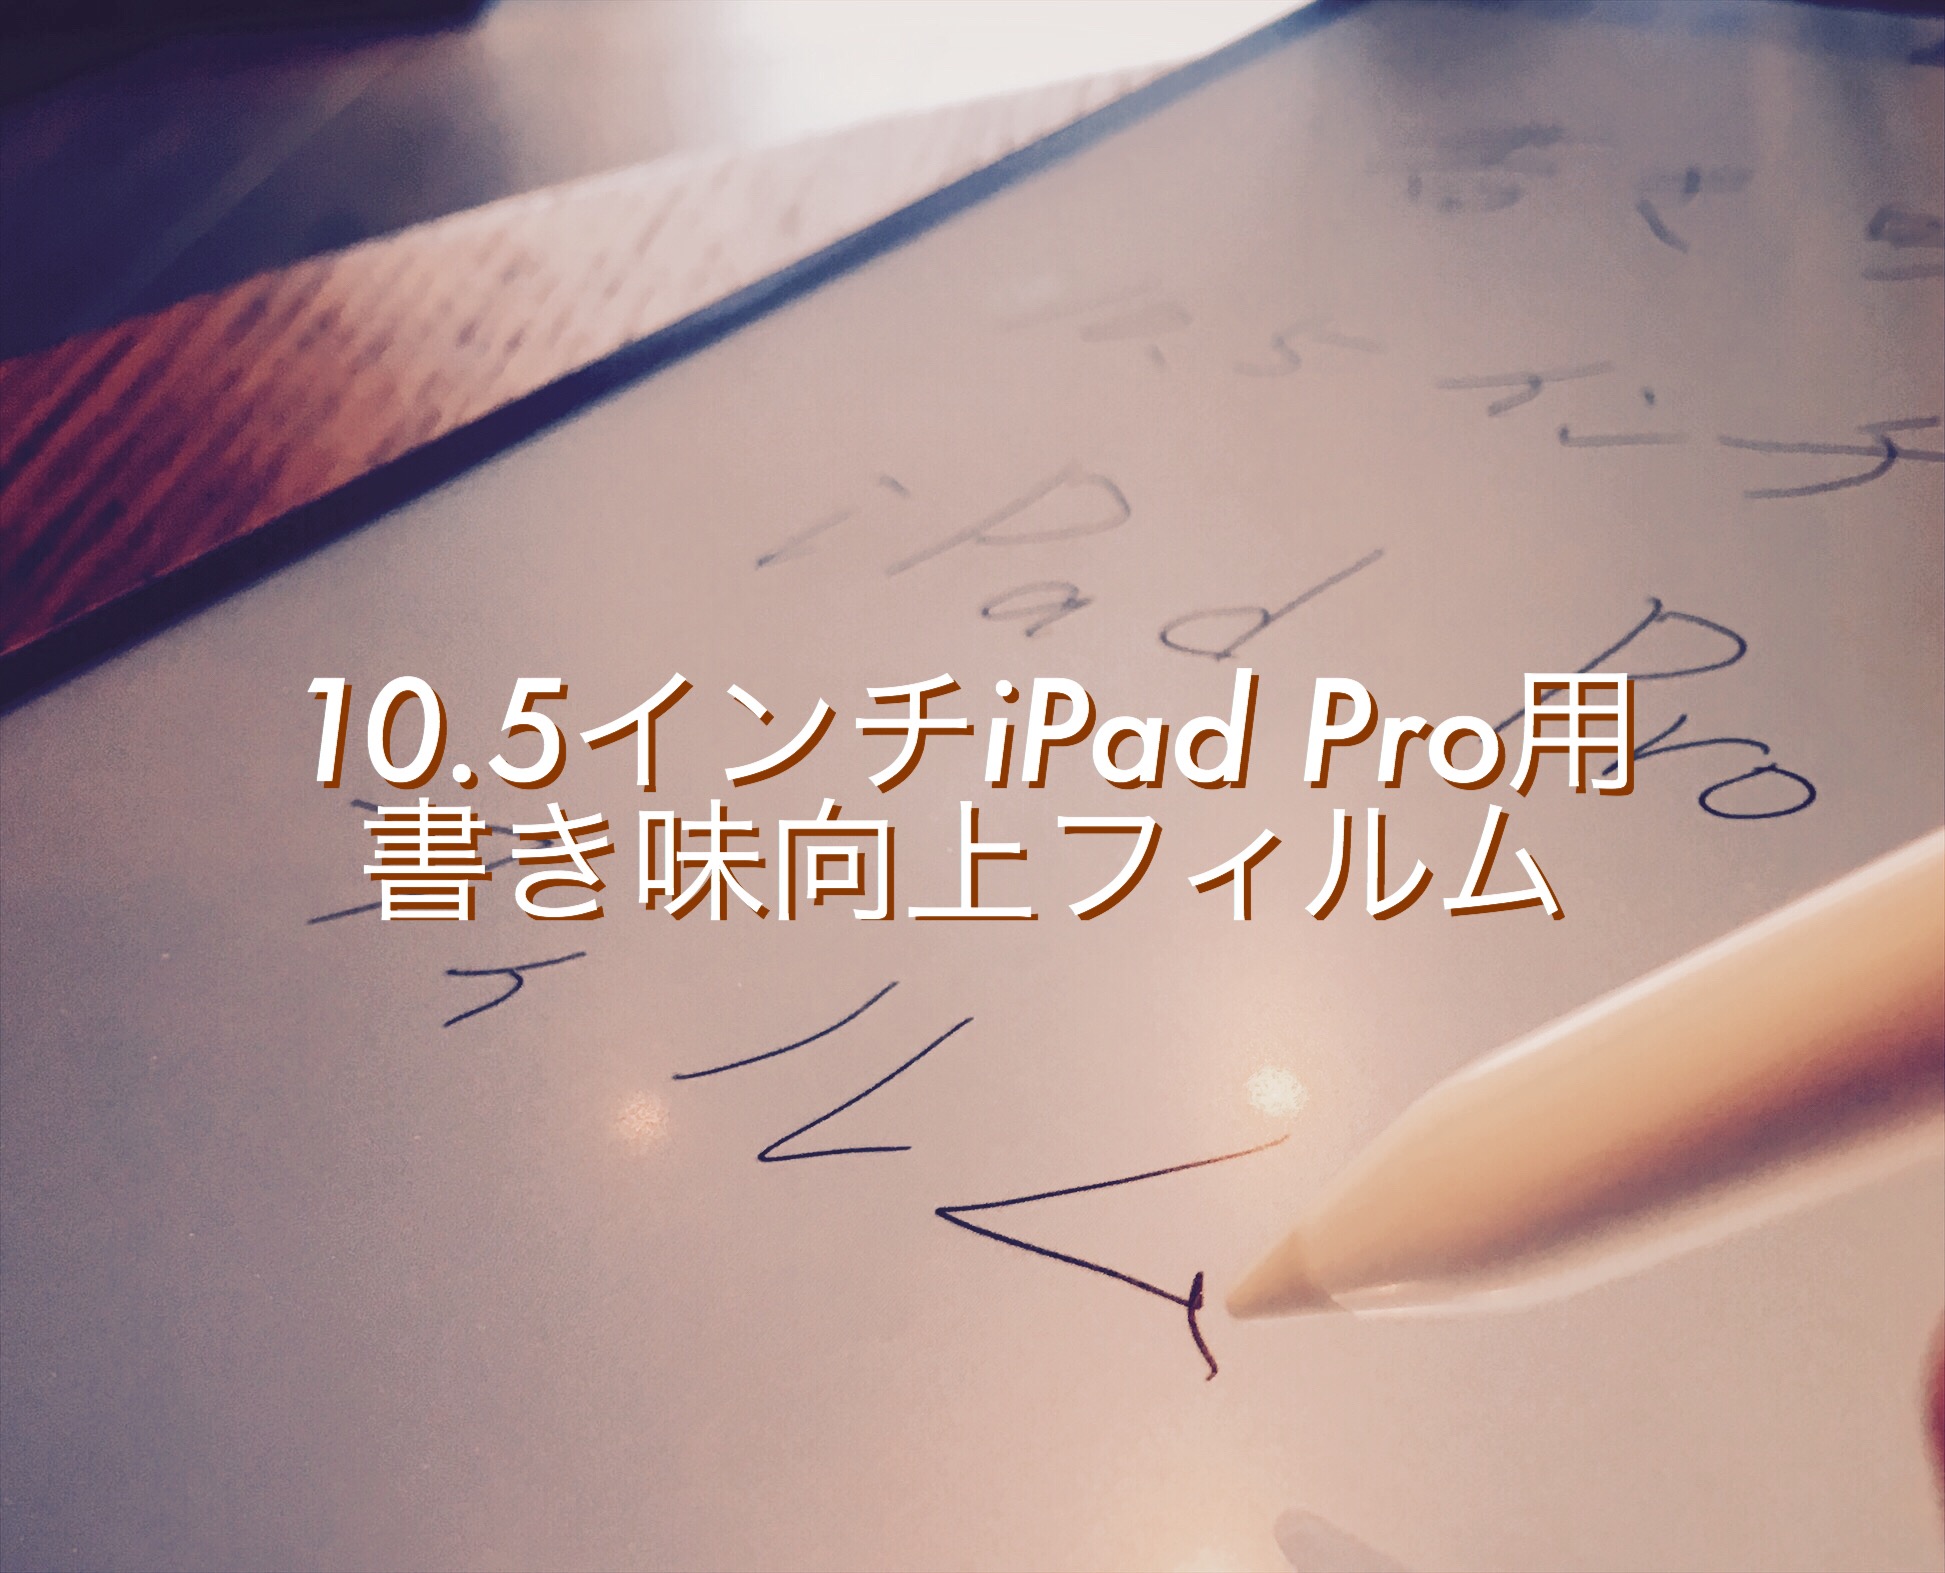 「ClearView iPad Pro 10.5インチ用フィルム 書き味向上」のイメージ写真